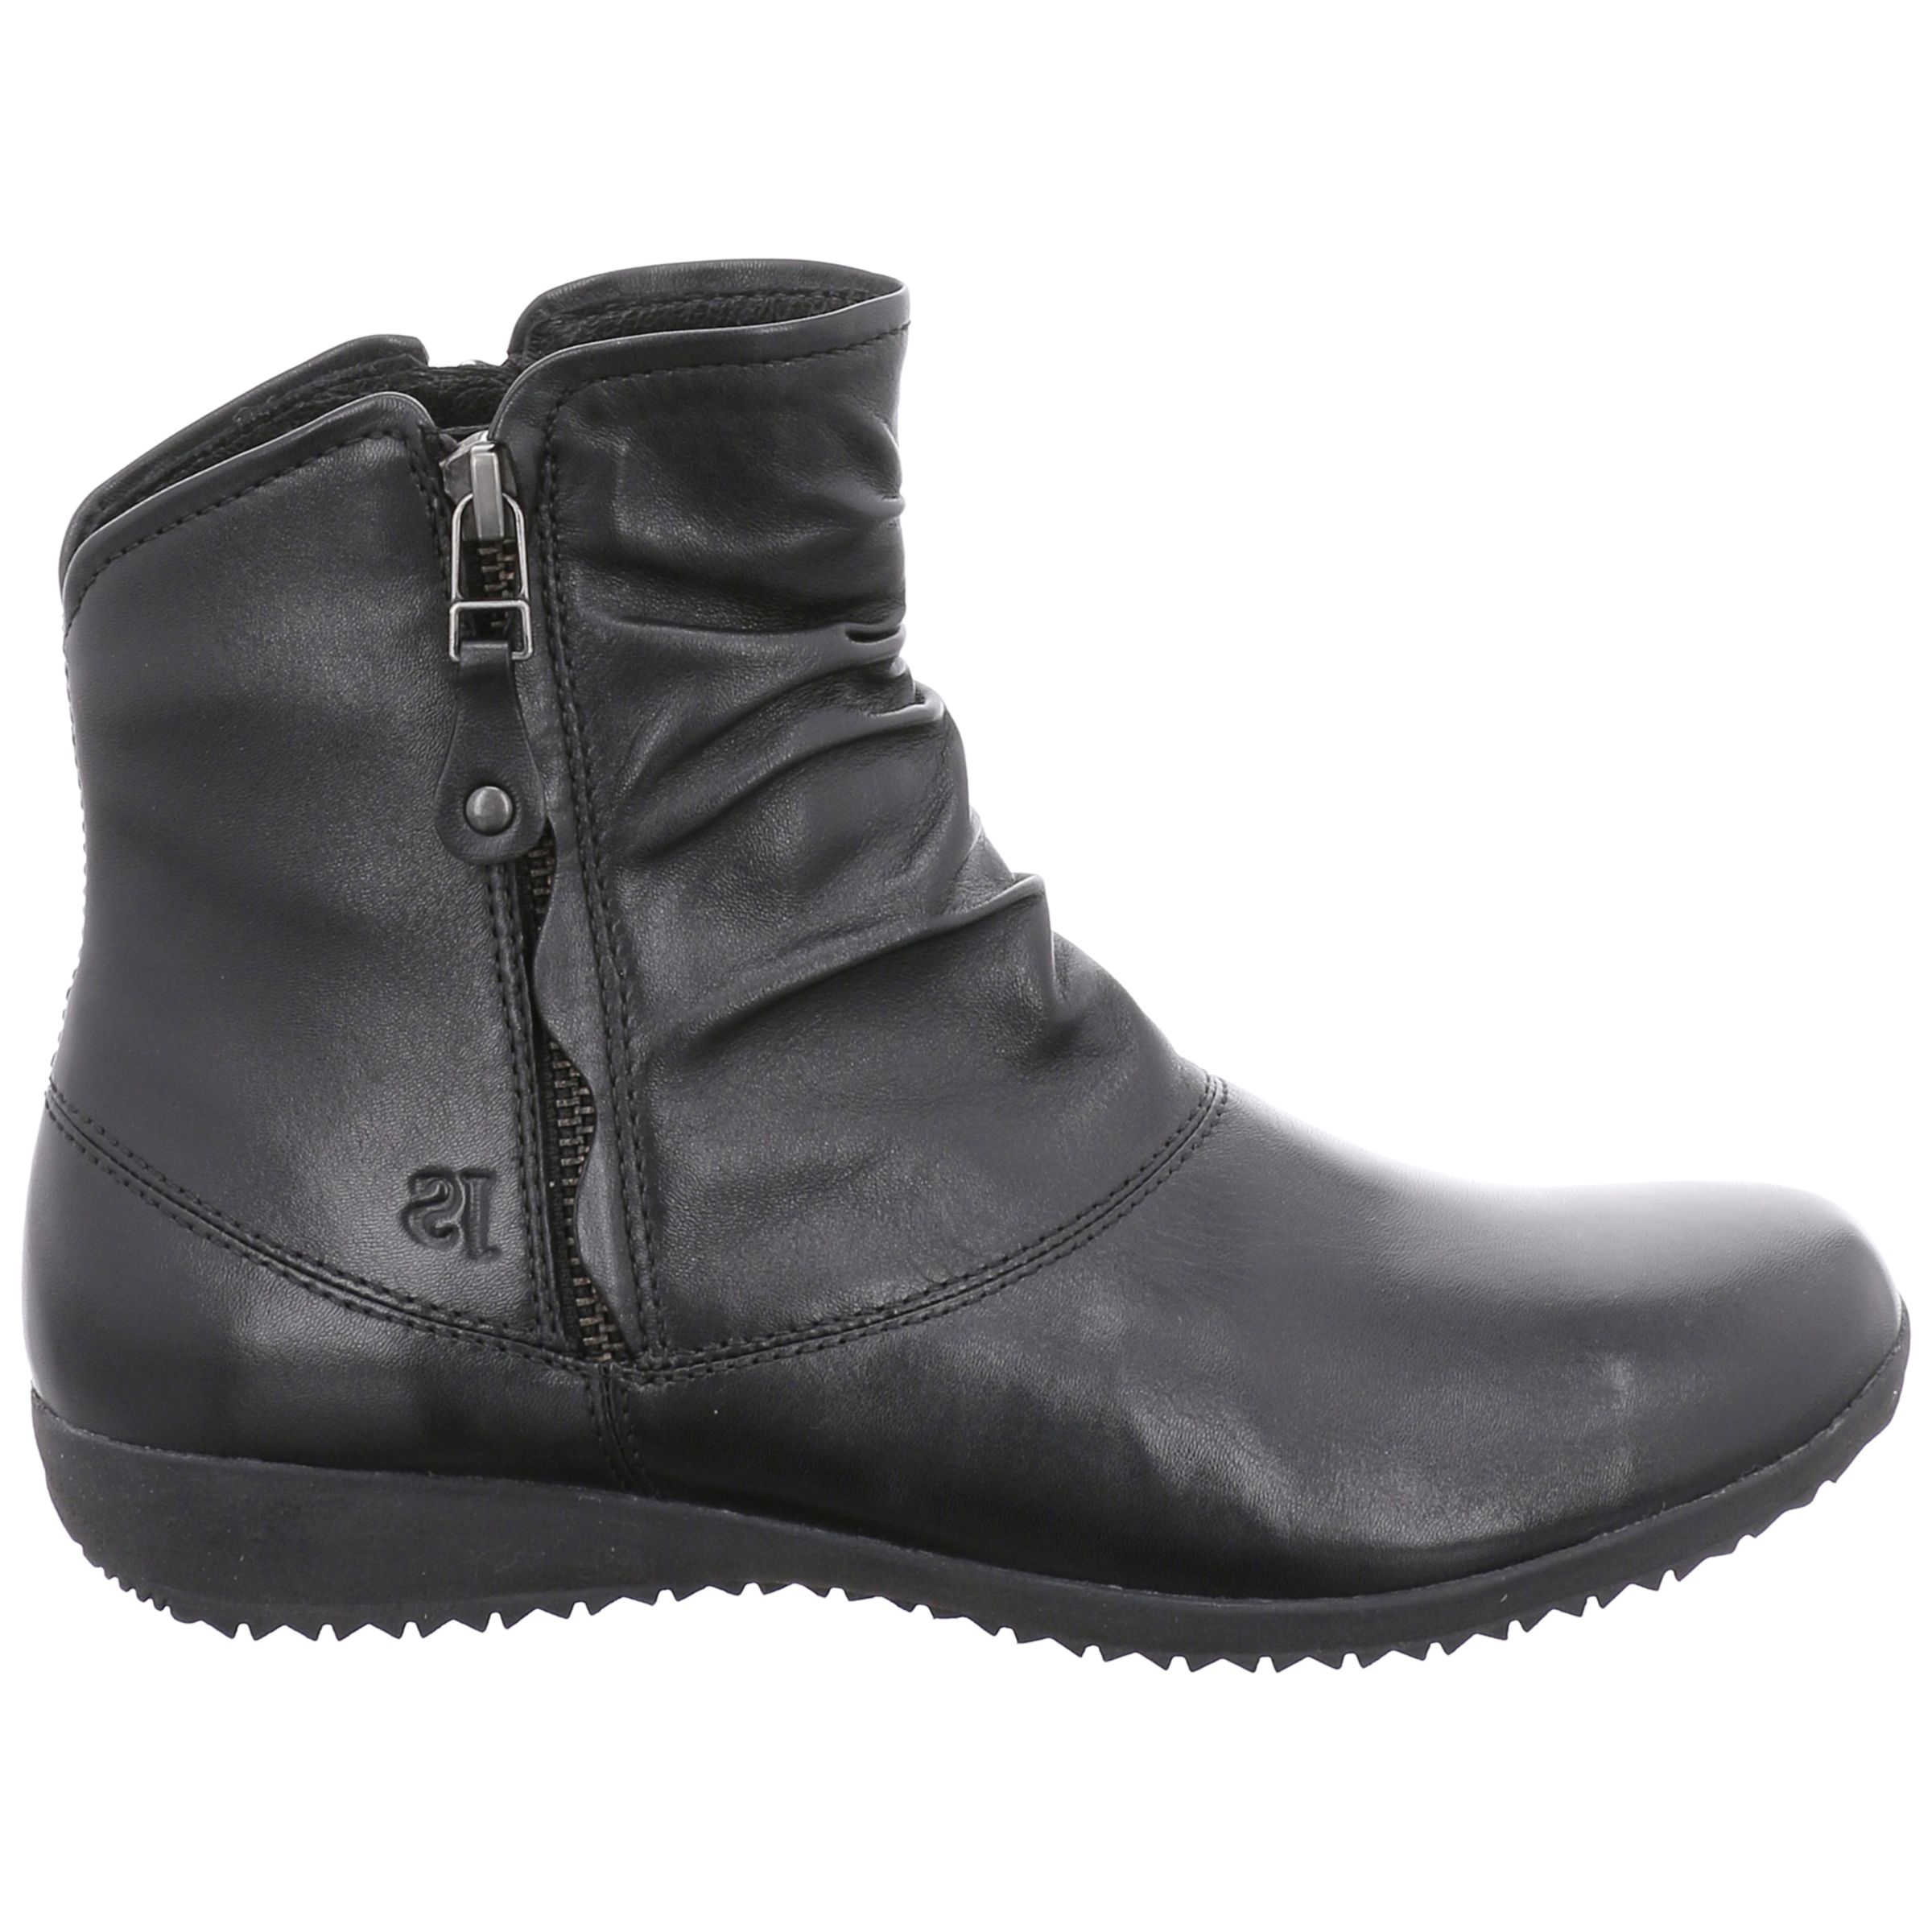 Josef Seibel Naly 24 Wedge Heel Ankle Boots, Black Leather